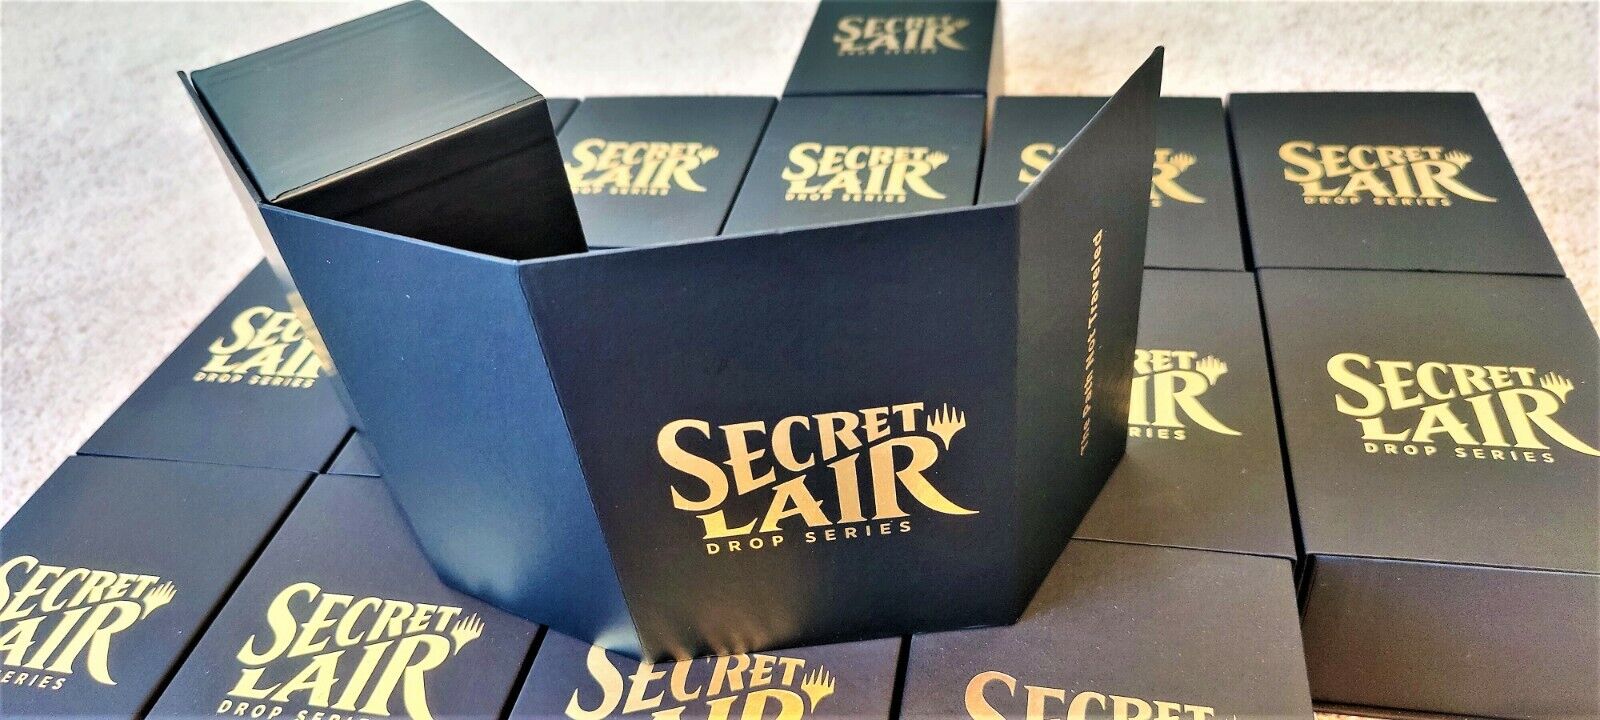 Secret Lair Mtg Empty Box (for Storage)